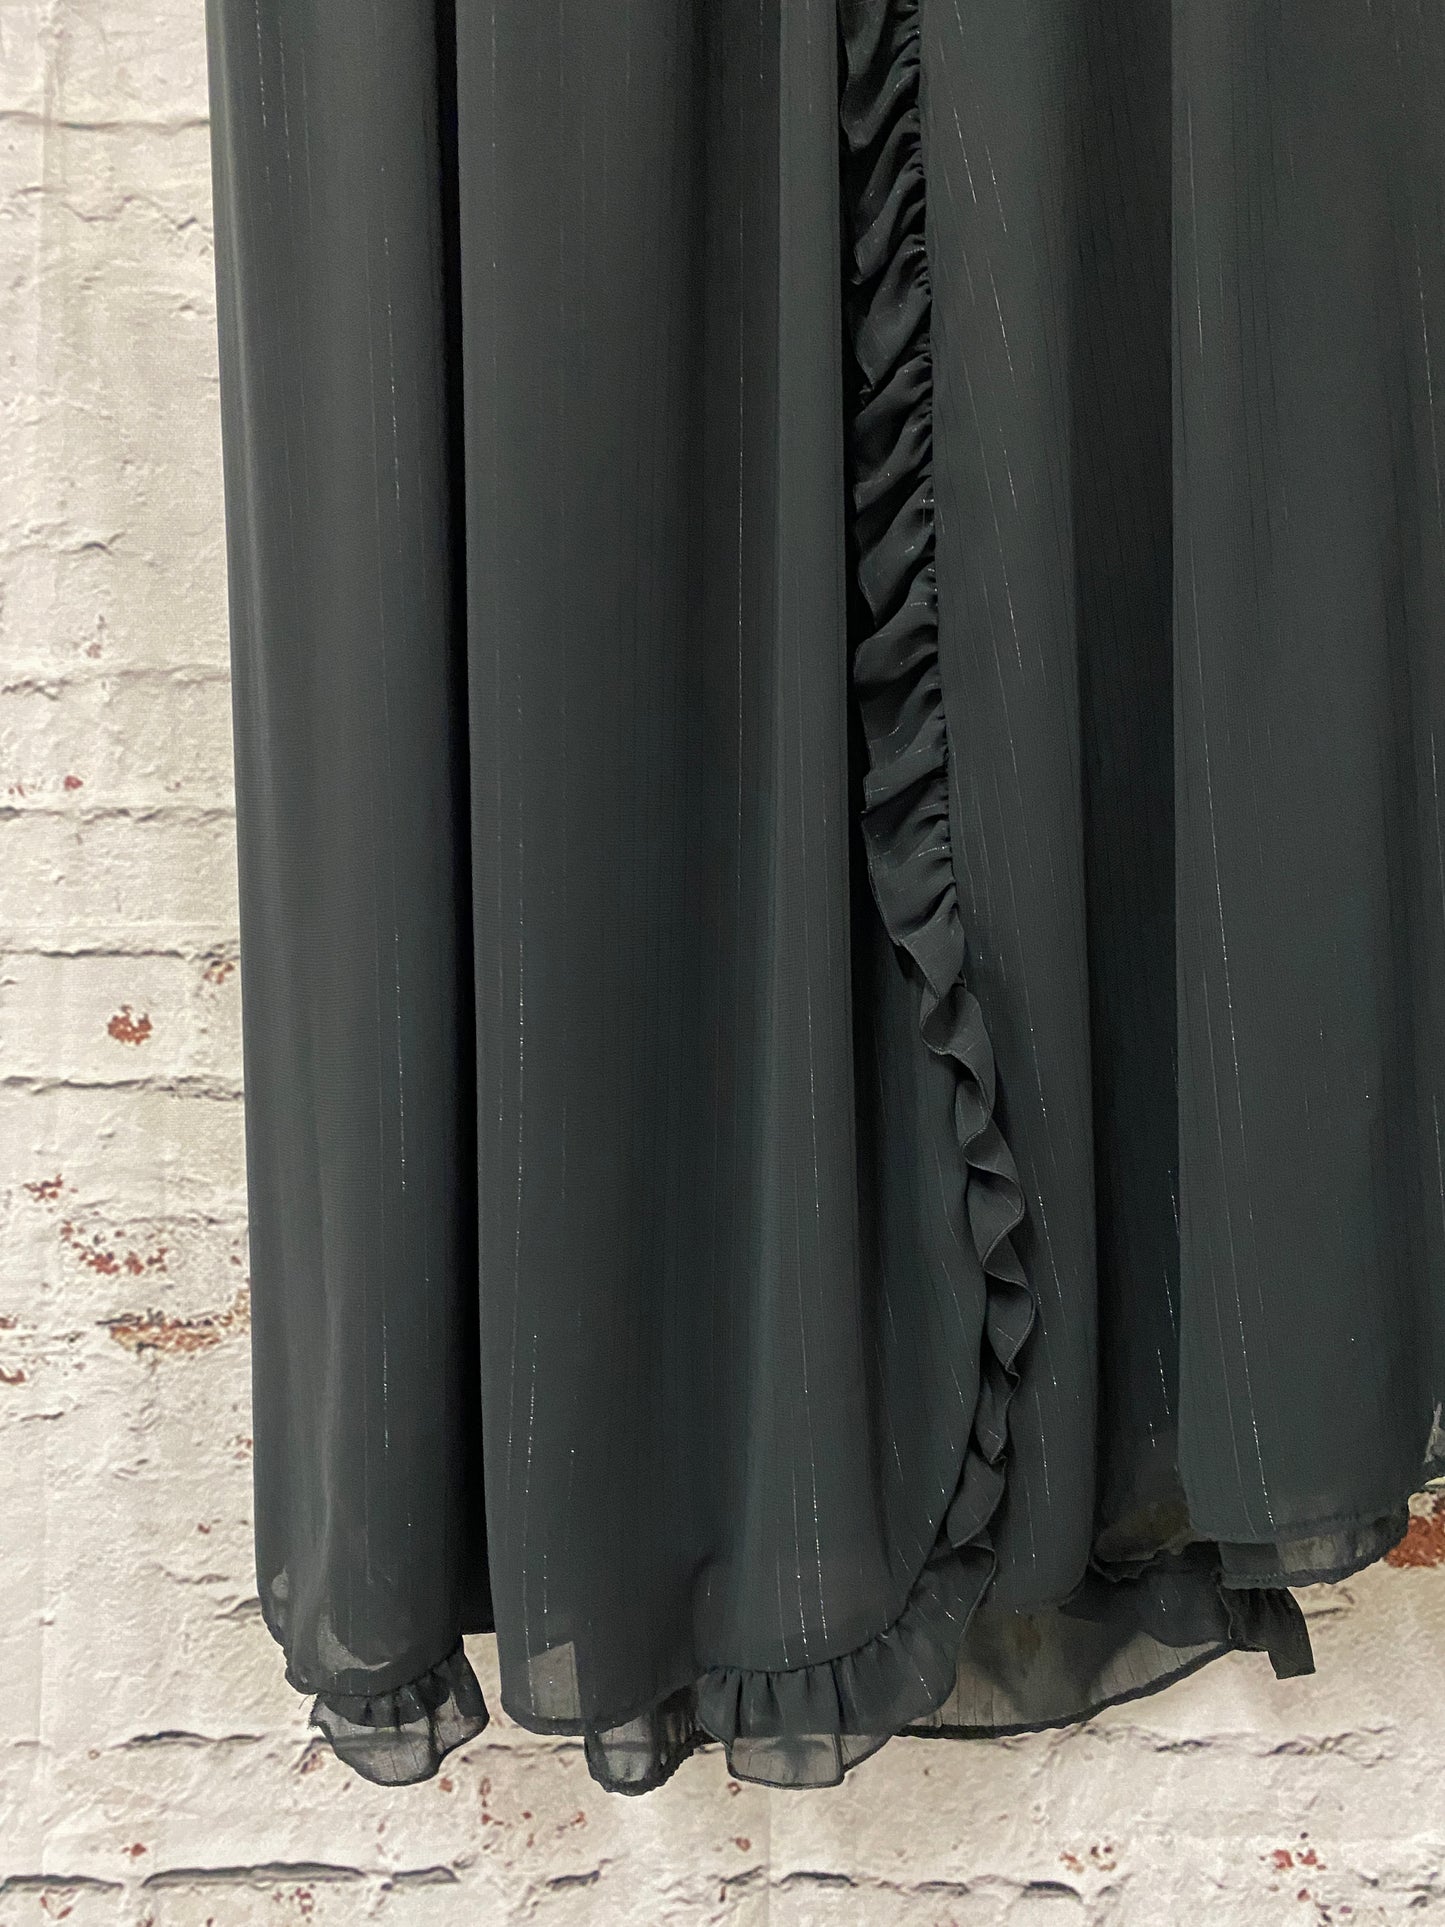 1990s Style Black Full Length Skirt With Sparkle Thread Size 18